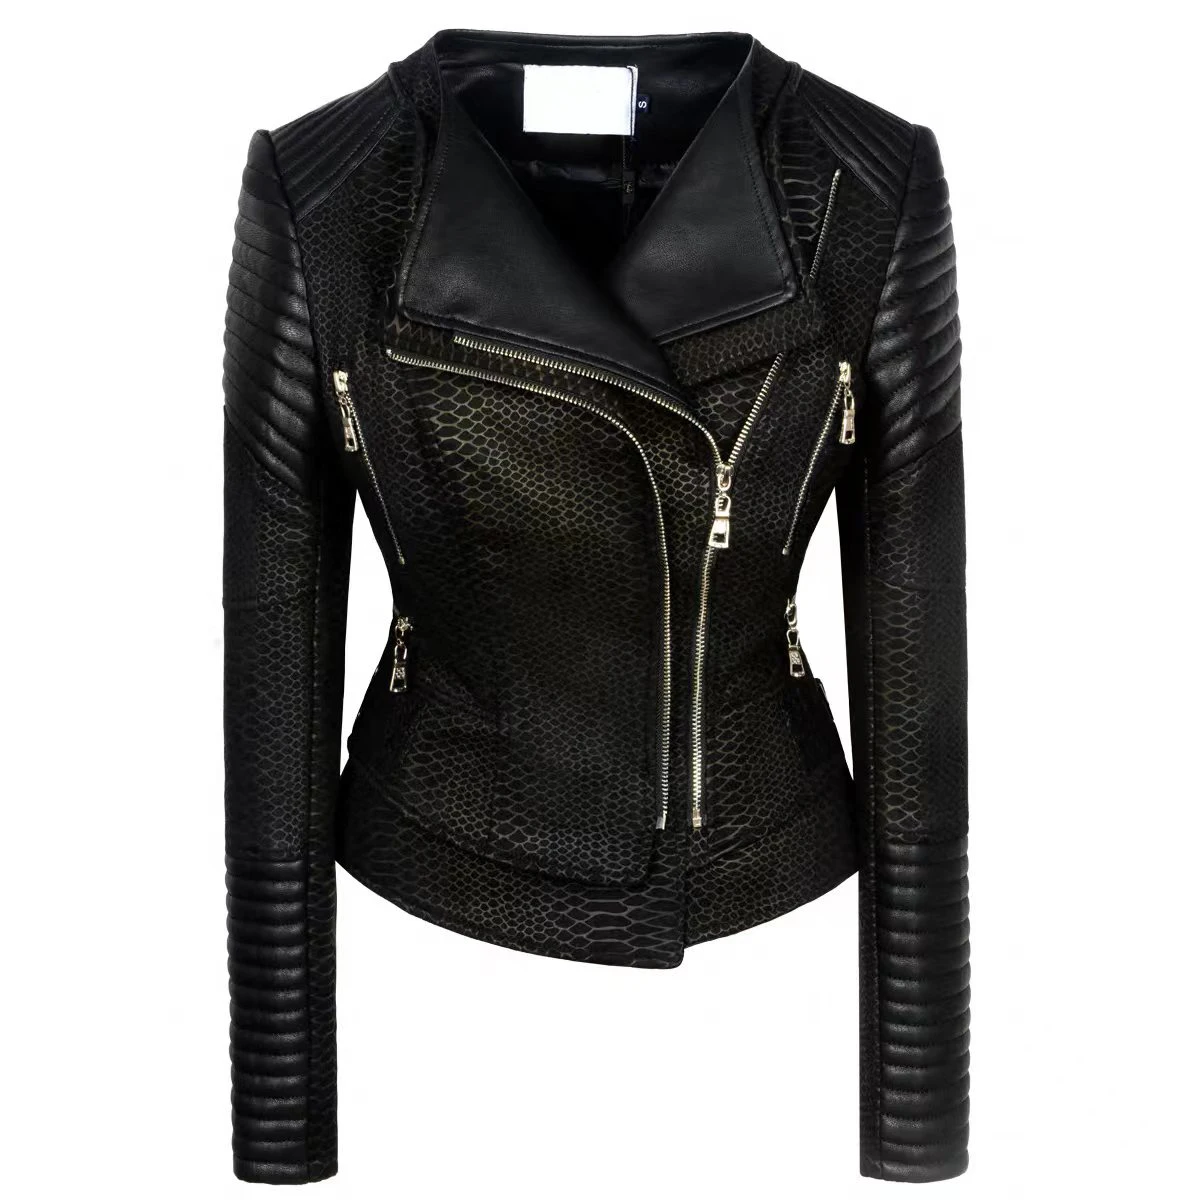 Enlarge New Women's Fashion Casual Punk Snake Lapel Leather Jacket Slim Fit Short Motorcycle Suit Pu Coat